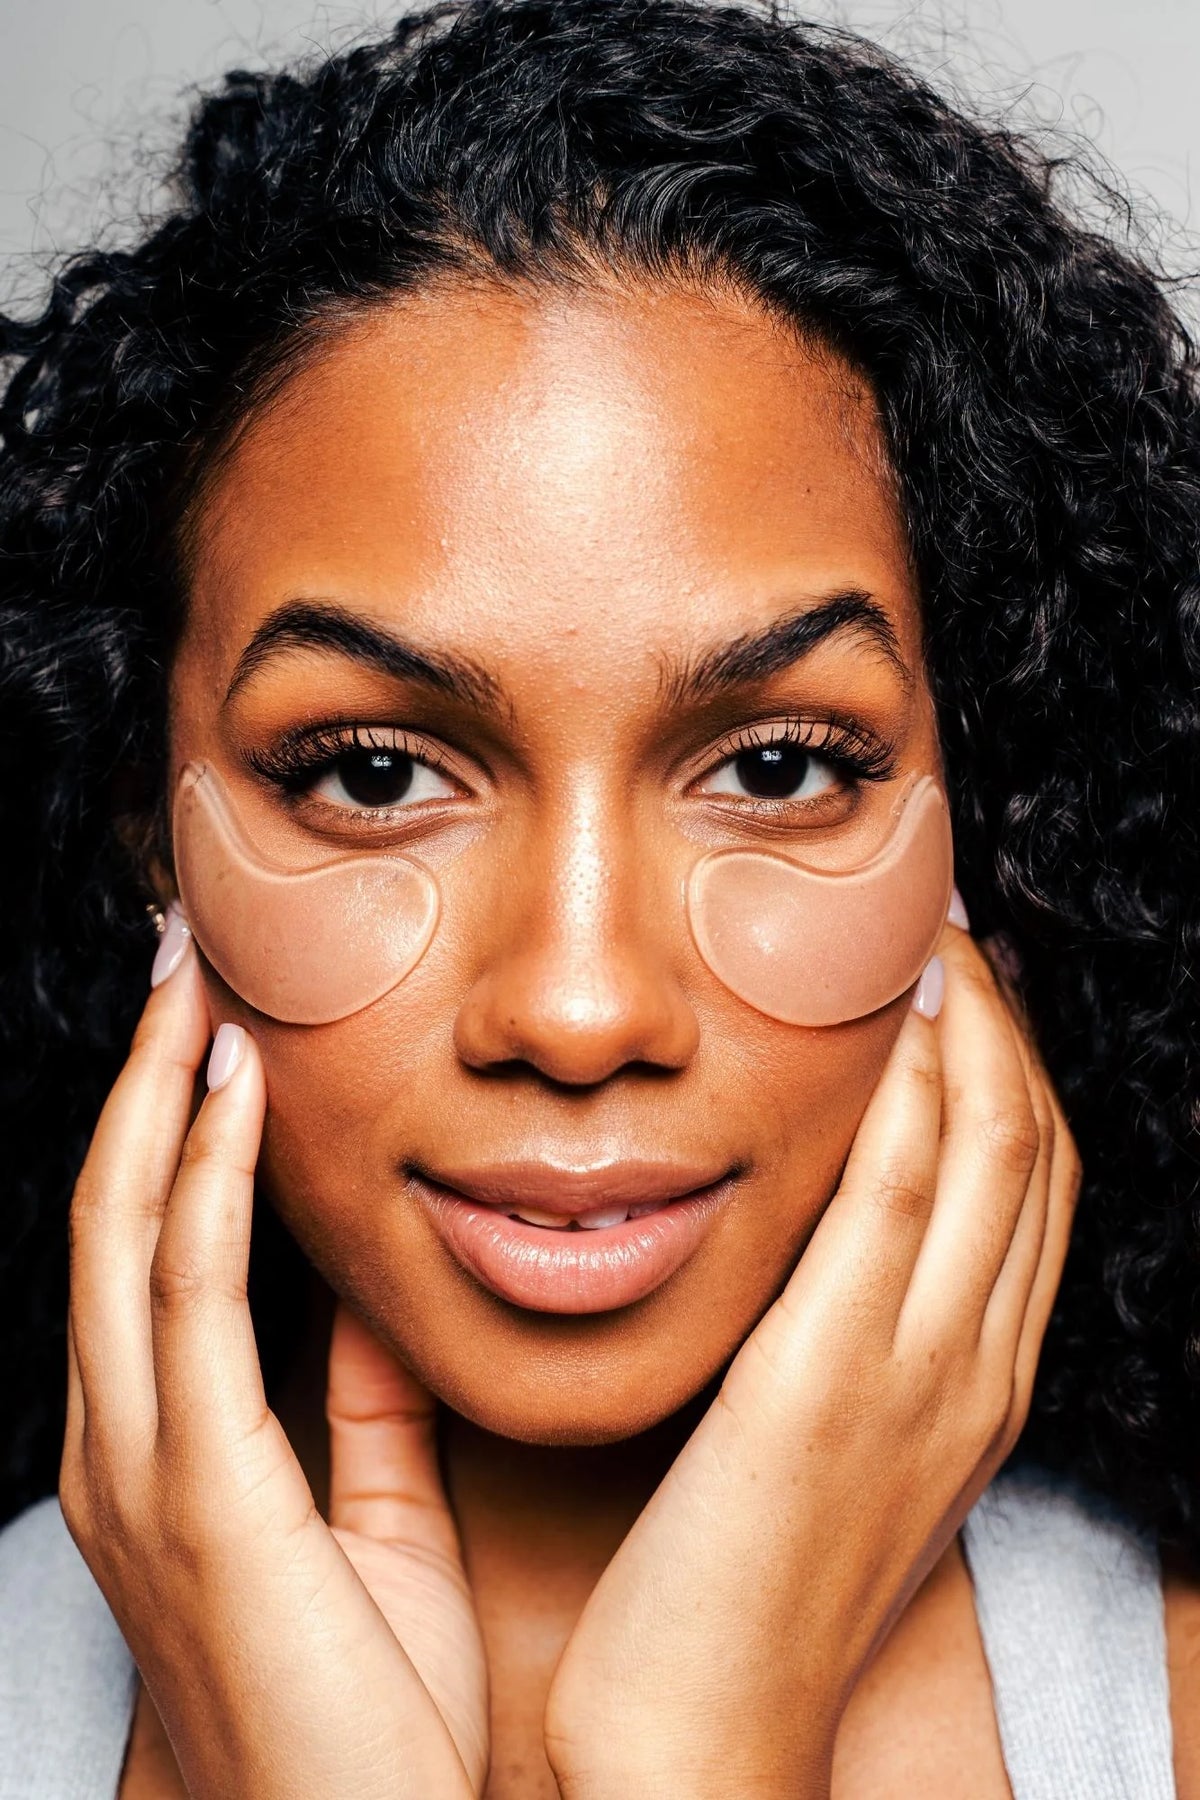 Aprés Beauty Lift + Restore Collagen Eye Masks